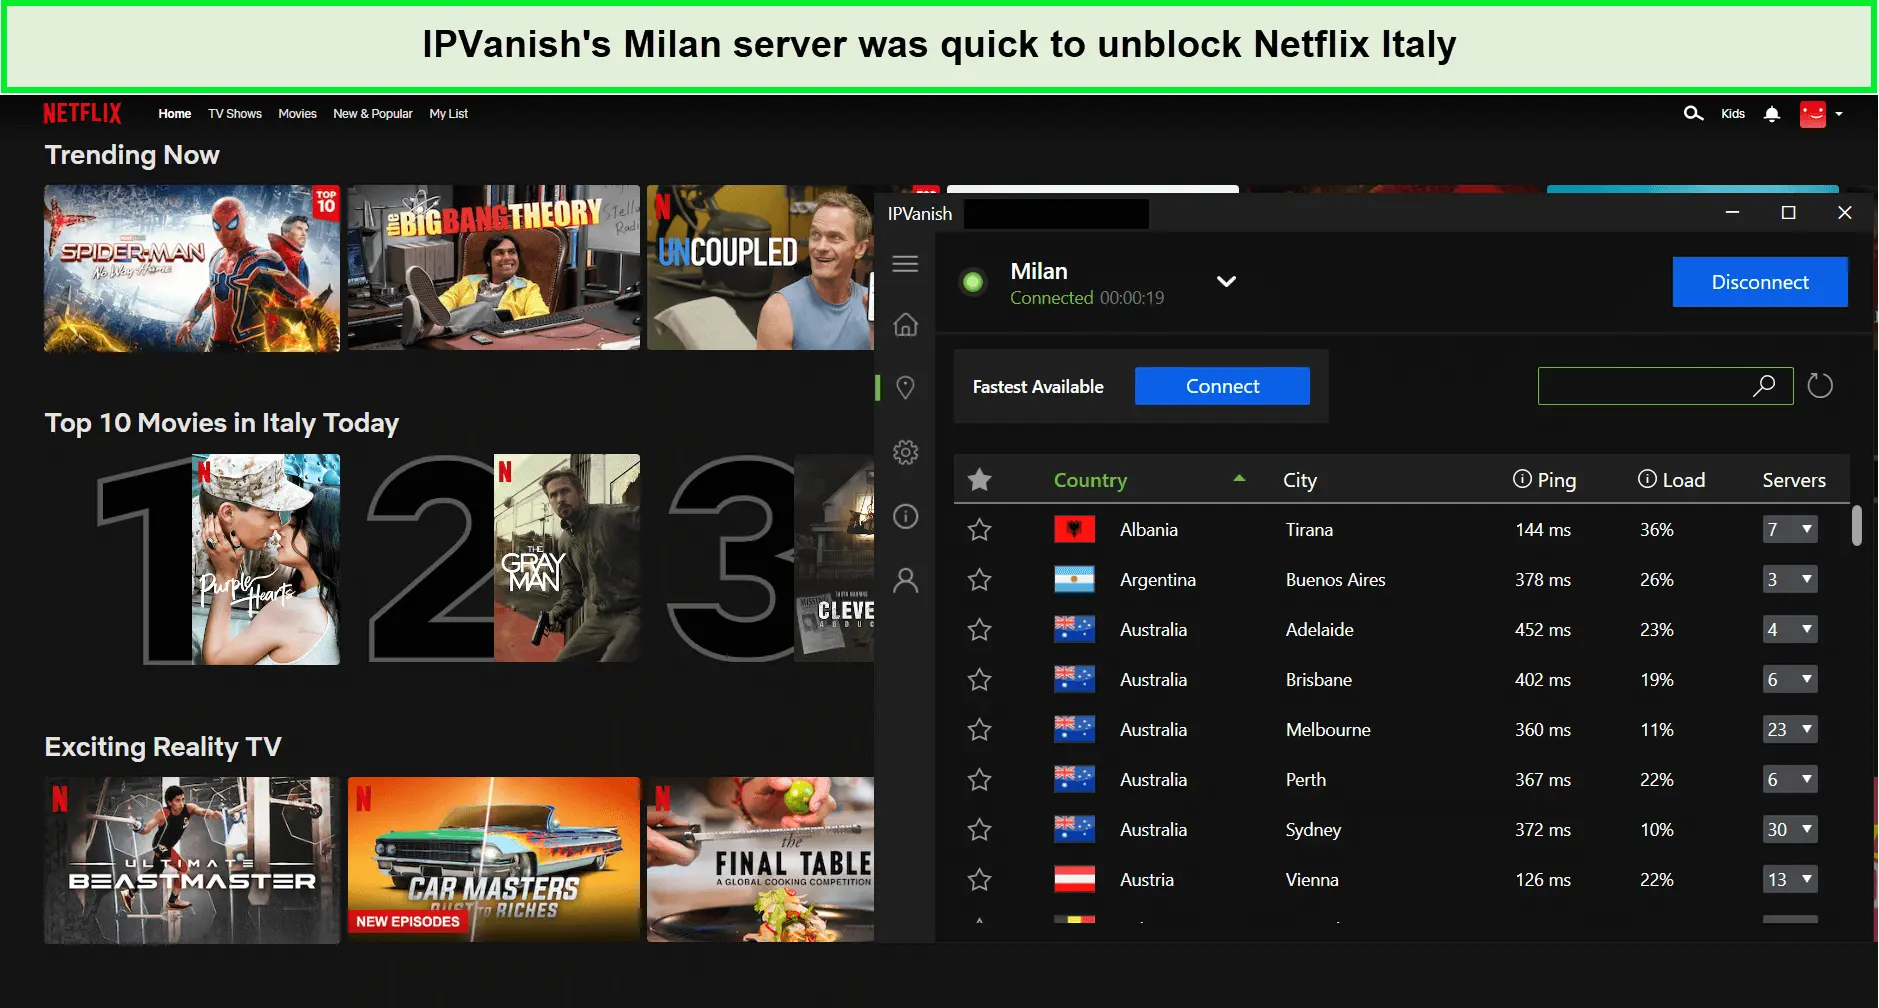 ipvanish-unblocked-netflix-in-Italy-with-milan-server